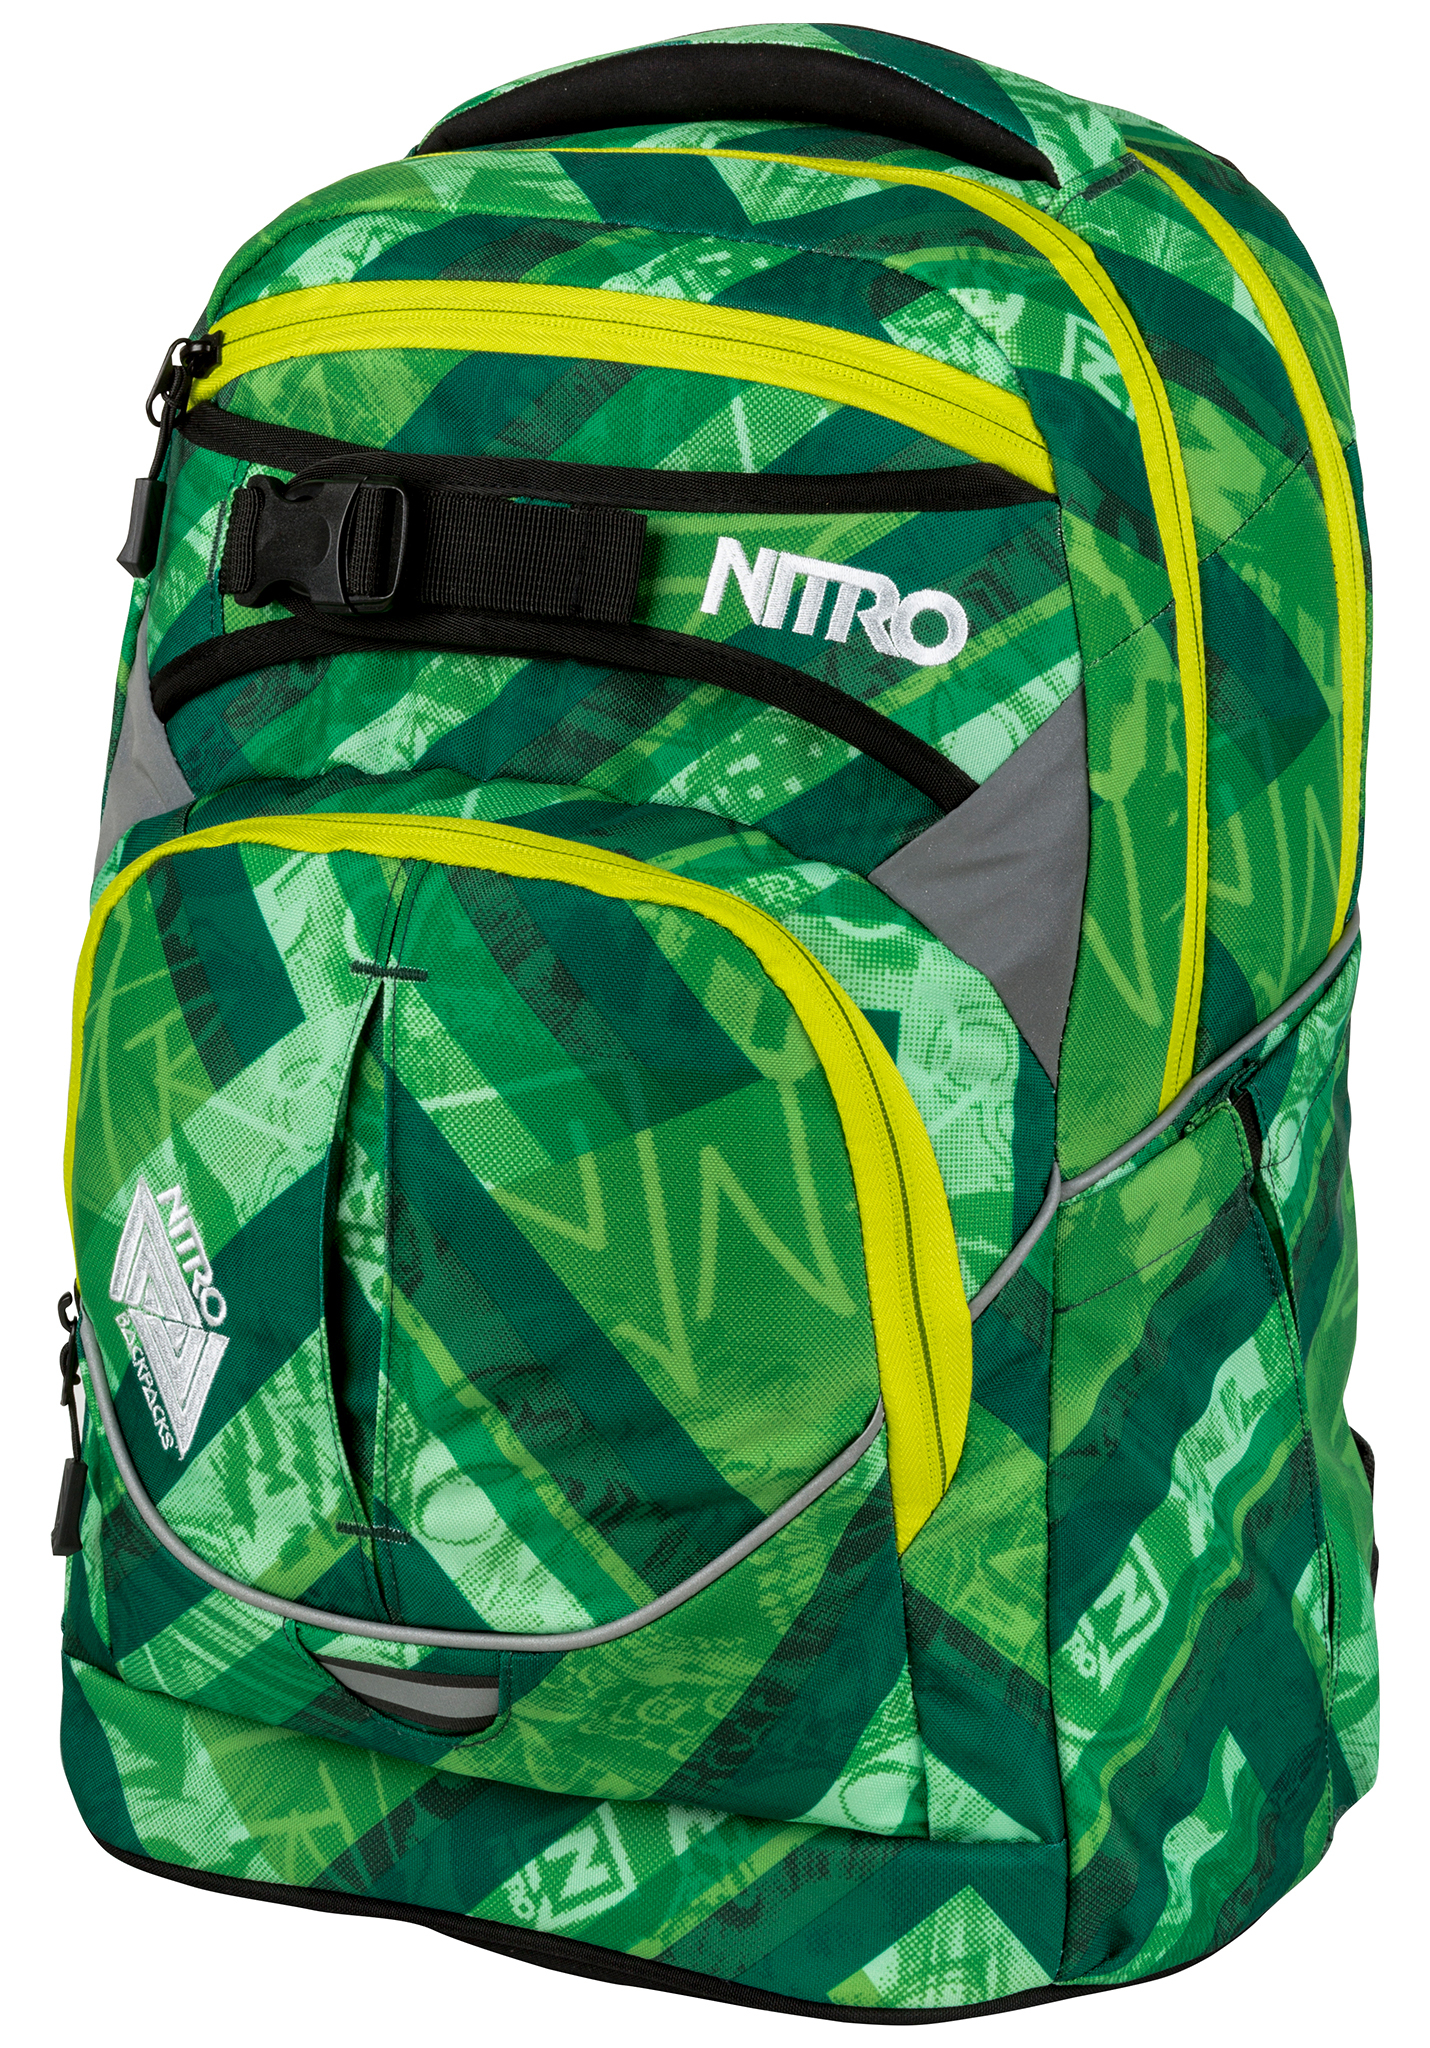 Nitro Superhero 30L Rucksack wicked green One Size